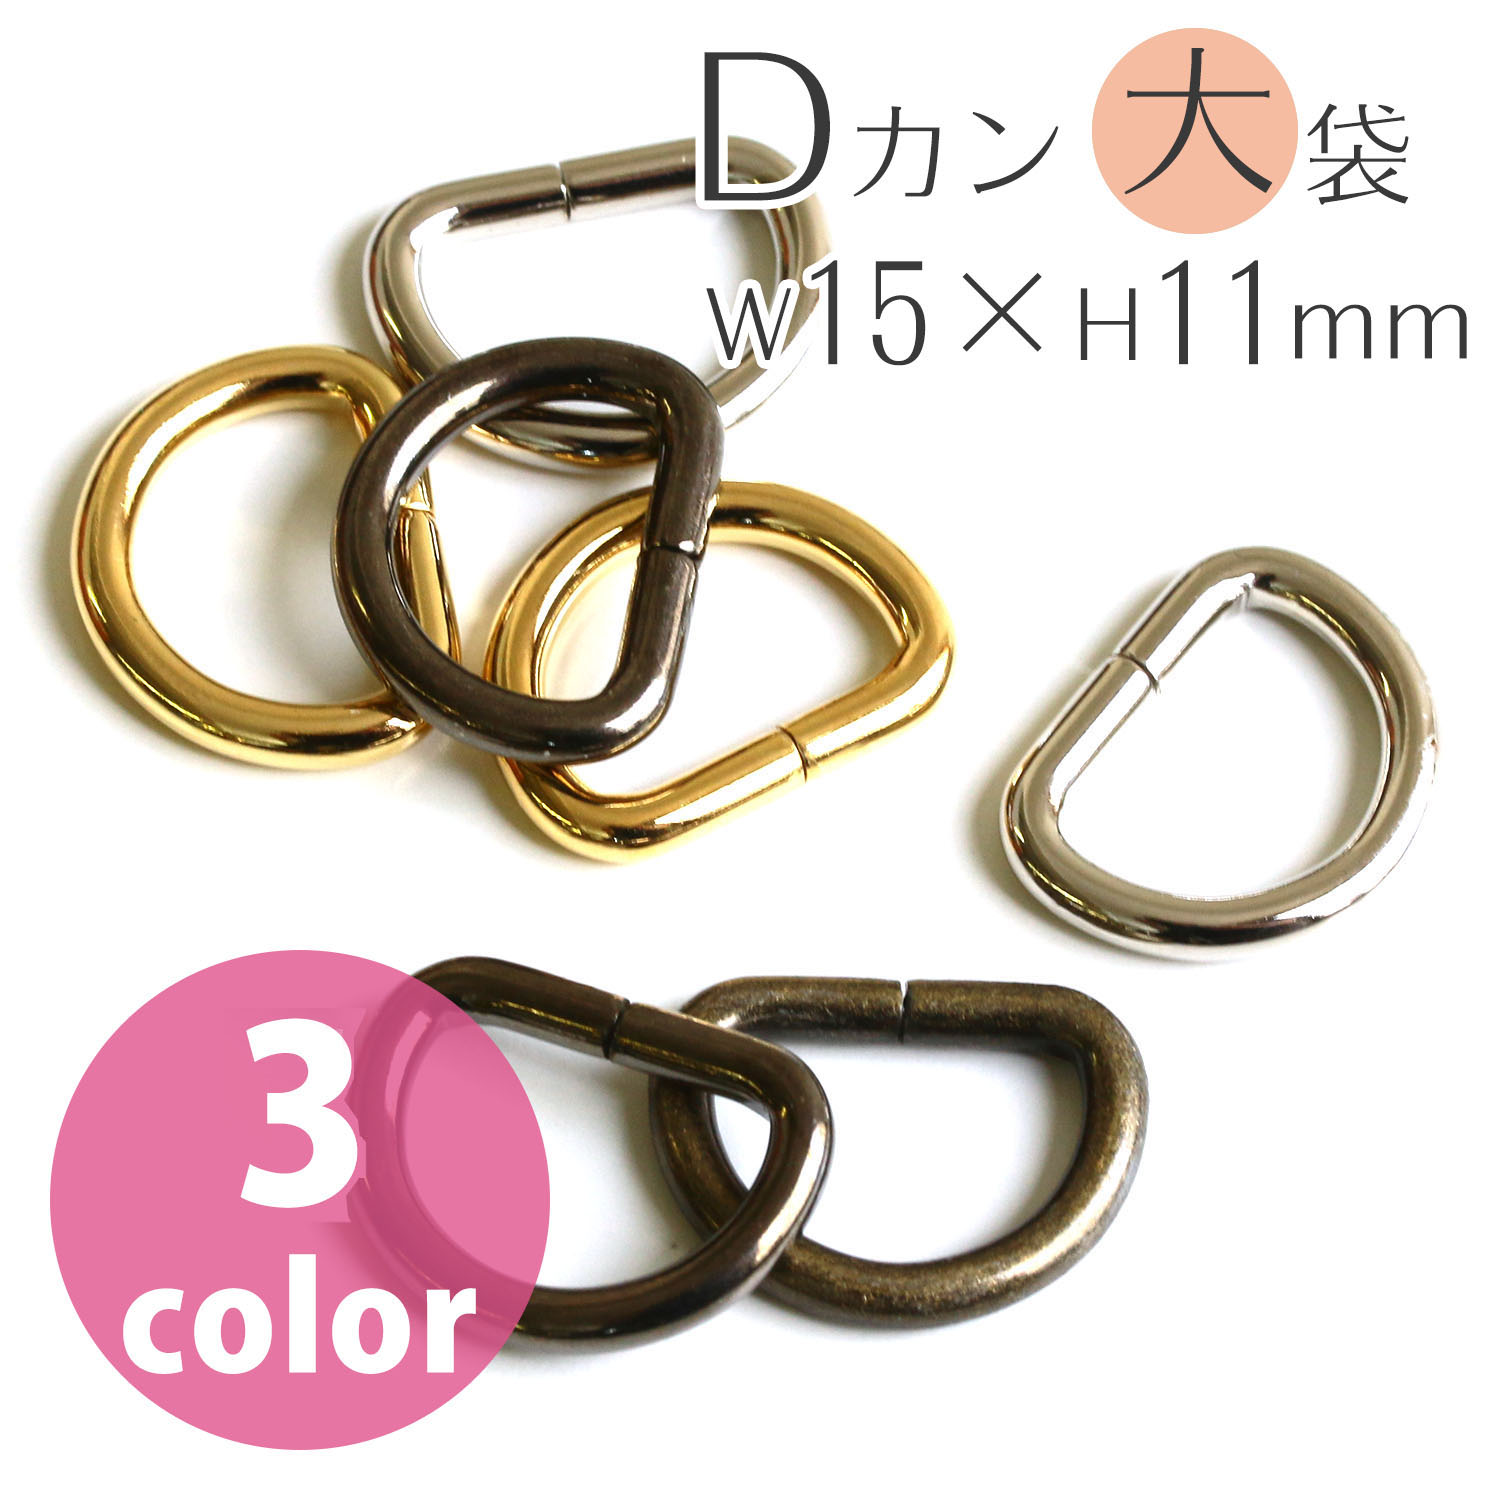 S22 D-Ring 15 x 11mm"", diameter 3mm 120pcs (bag)